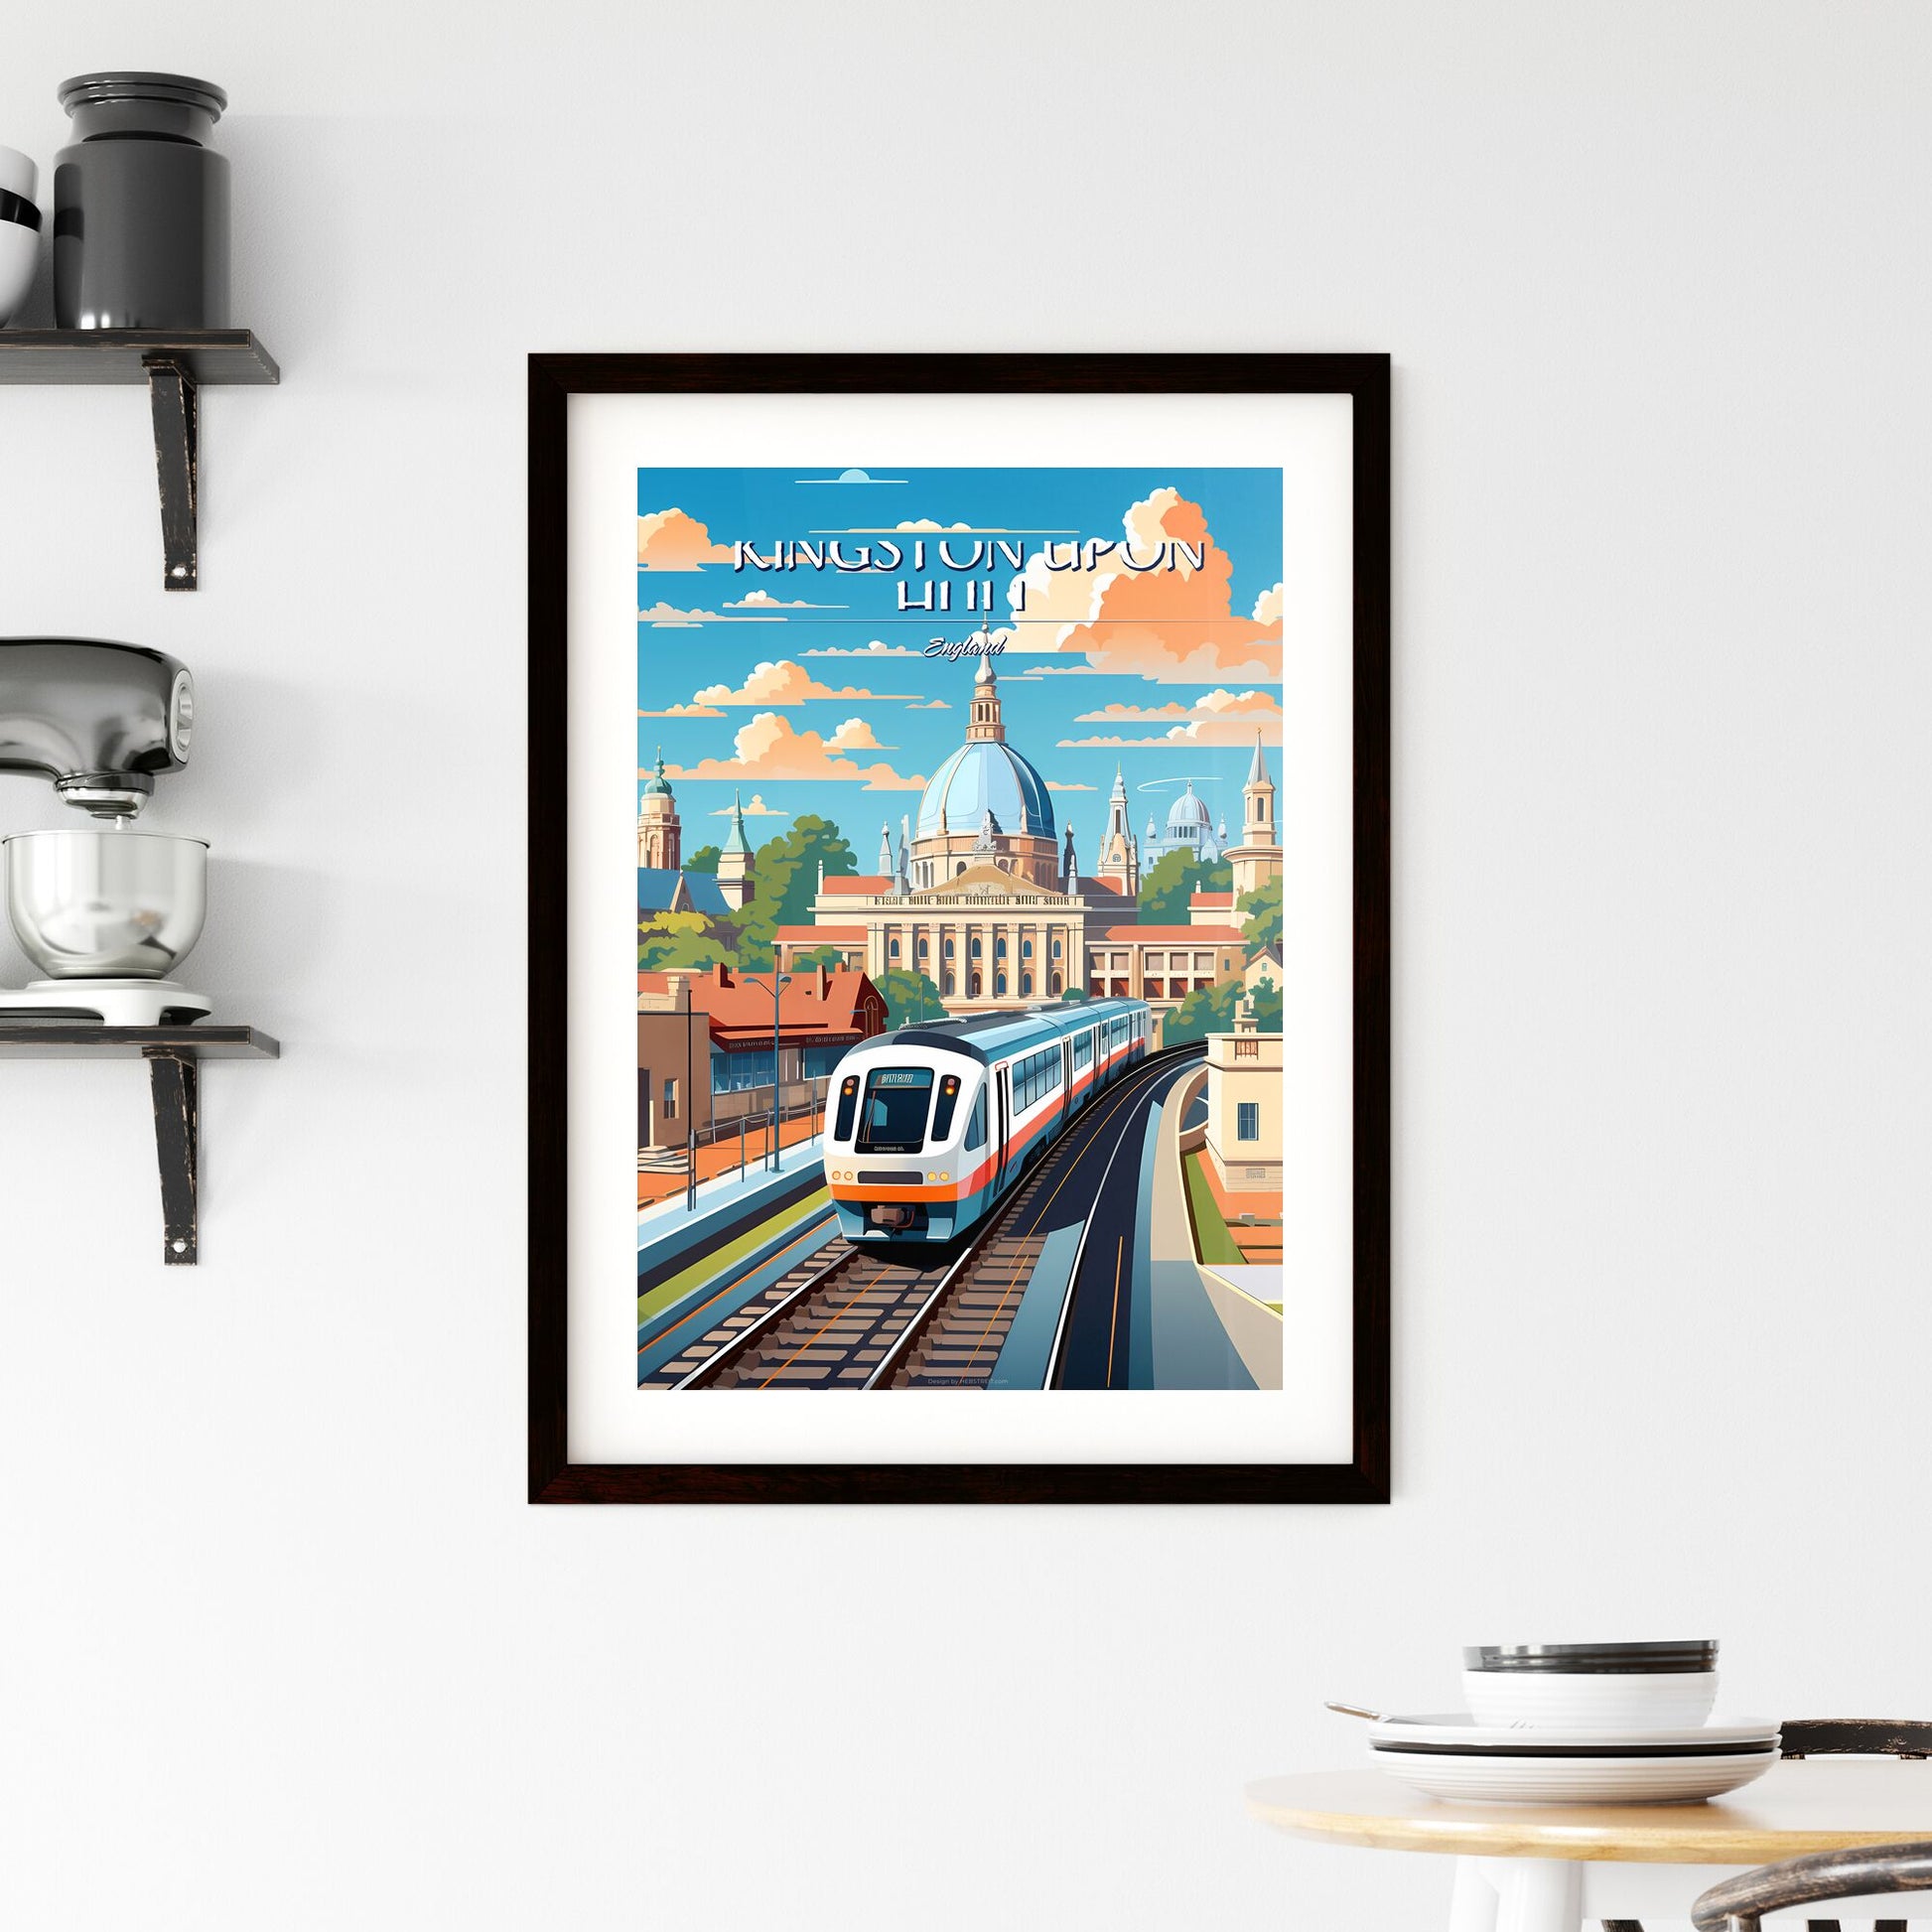 Kingston upon Hull, England - Art print of a train on the tracks Default Title